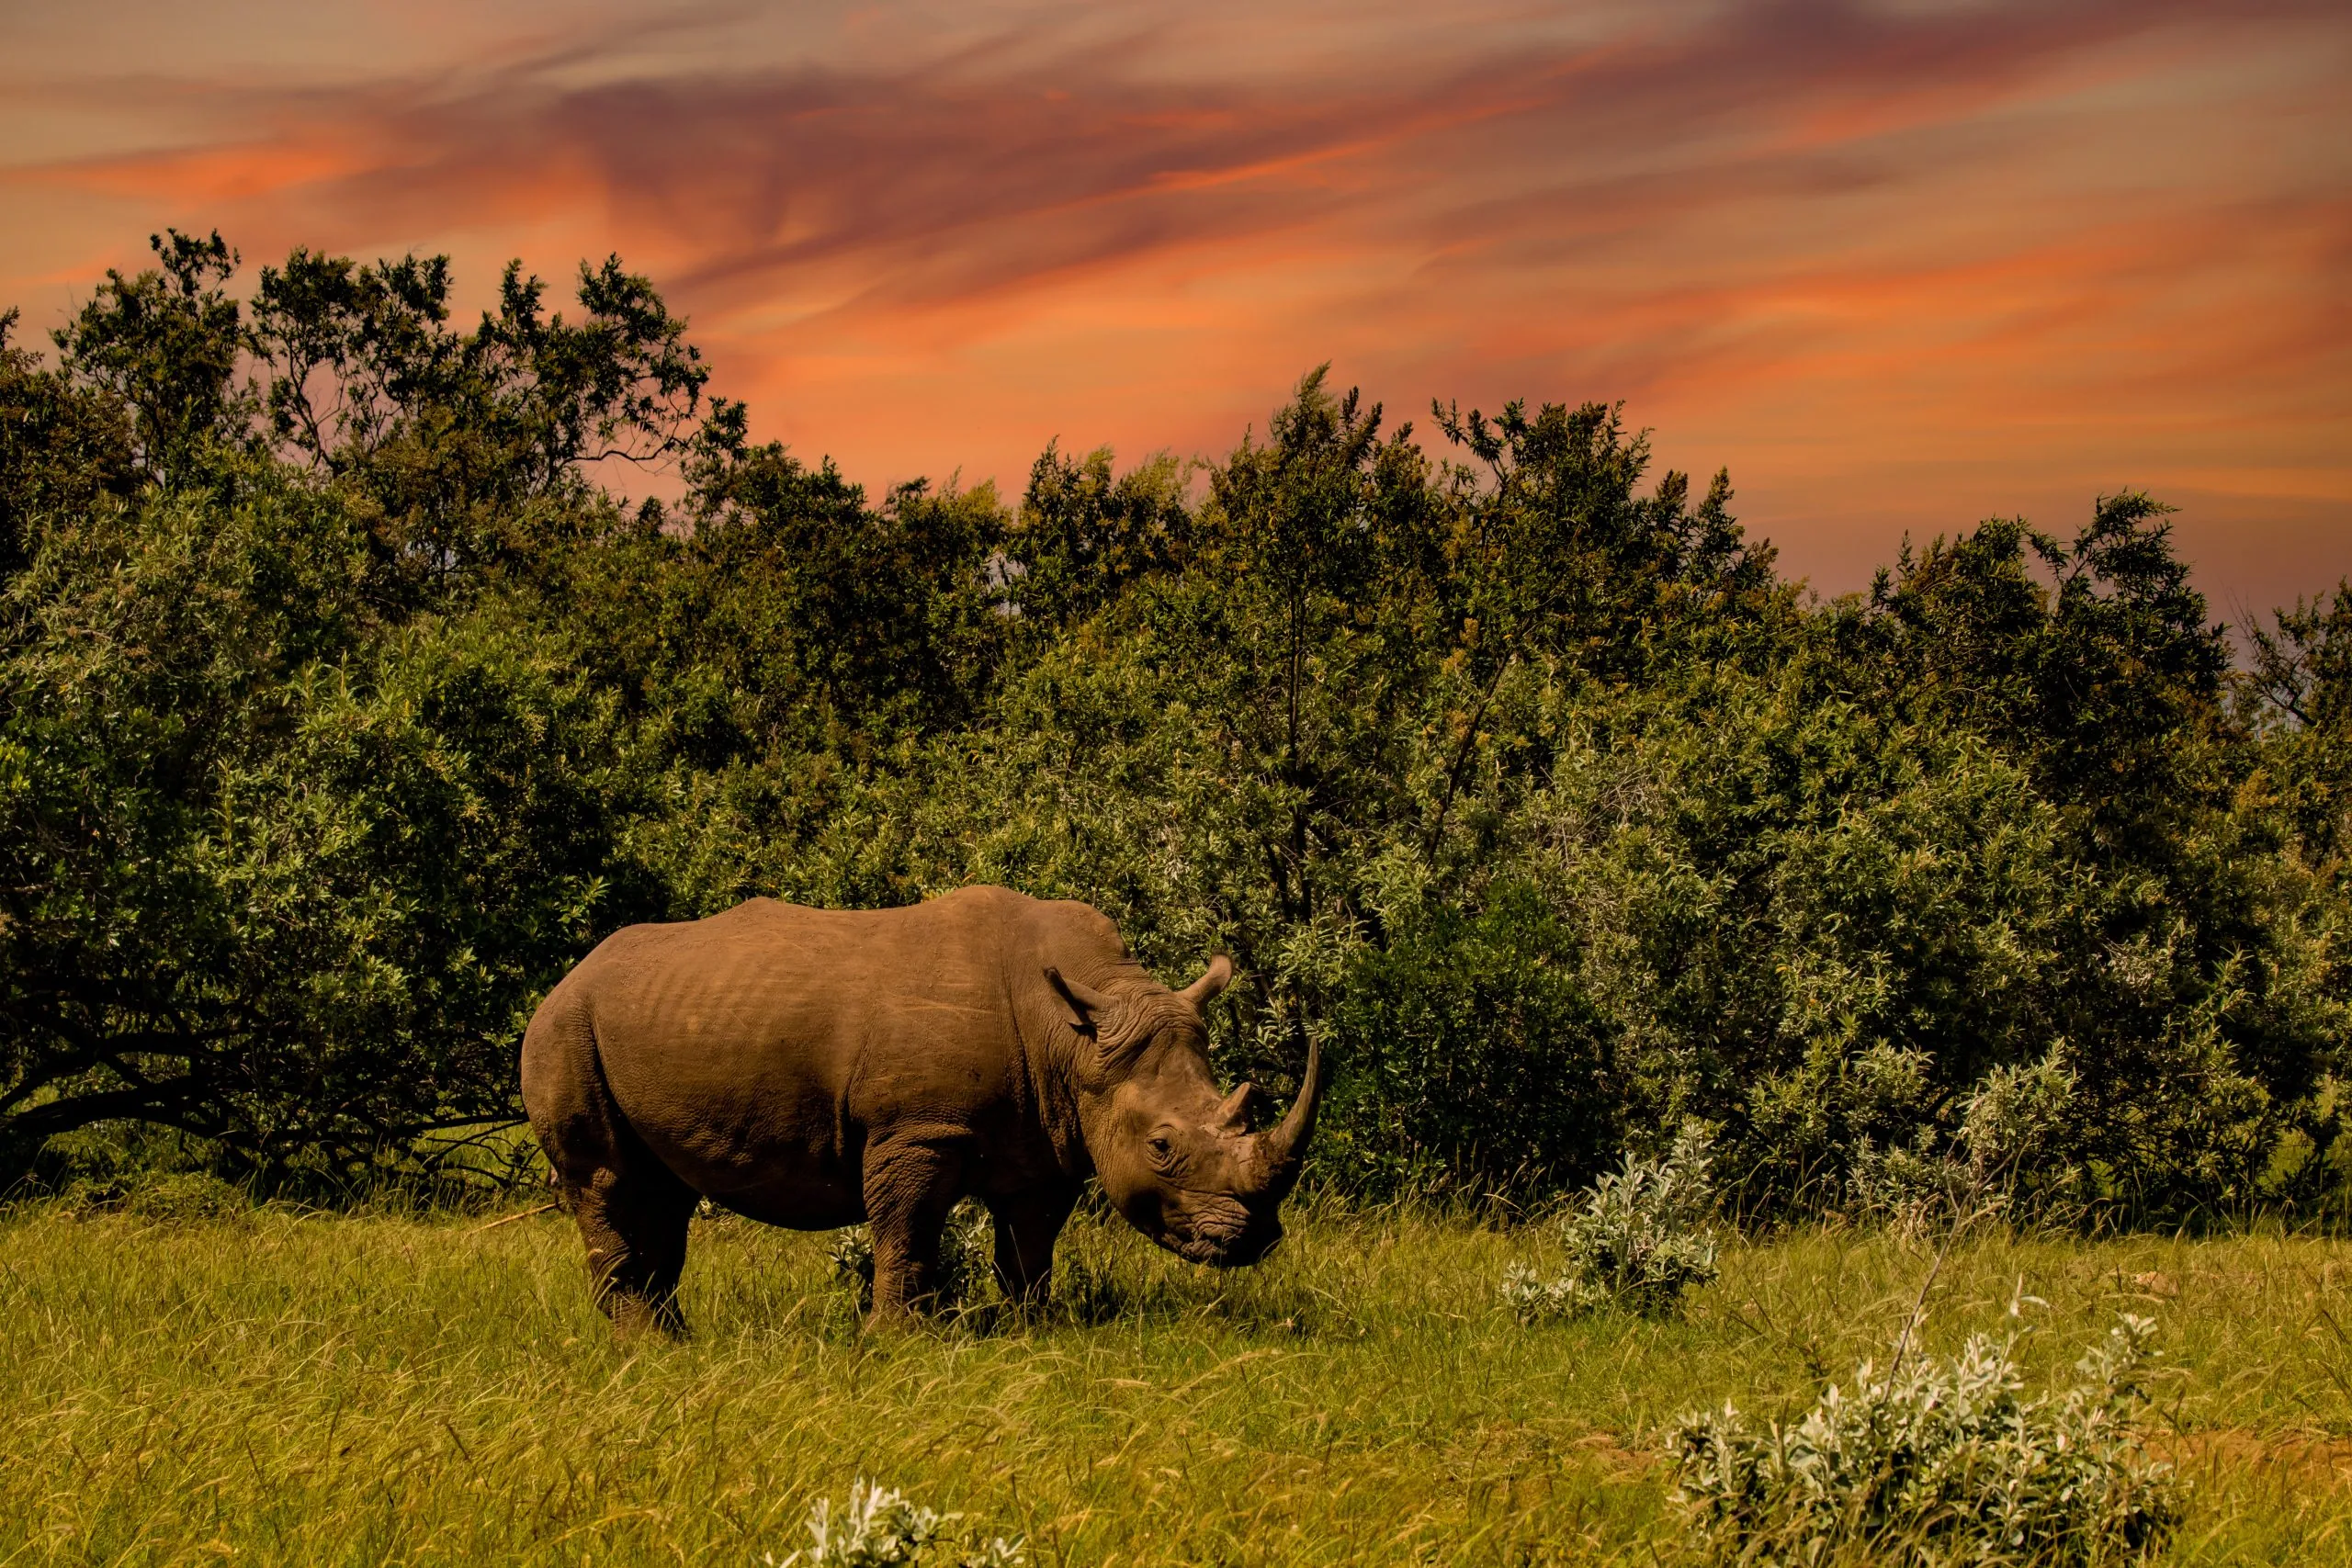 A Rhinoceros (rhino) on the savannah in the Maasai Mara reserve in Kenya, Africa